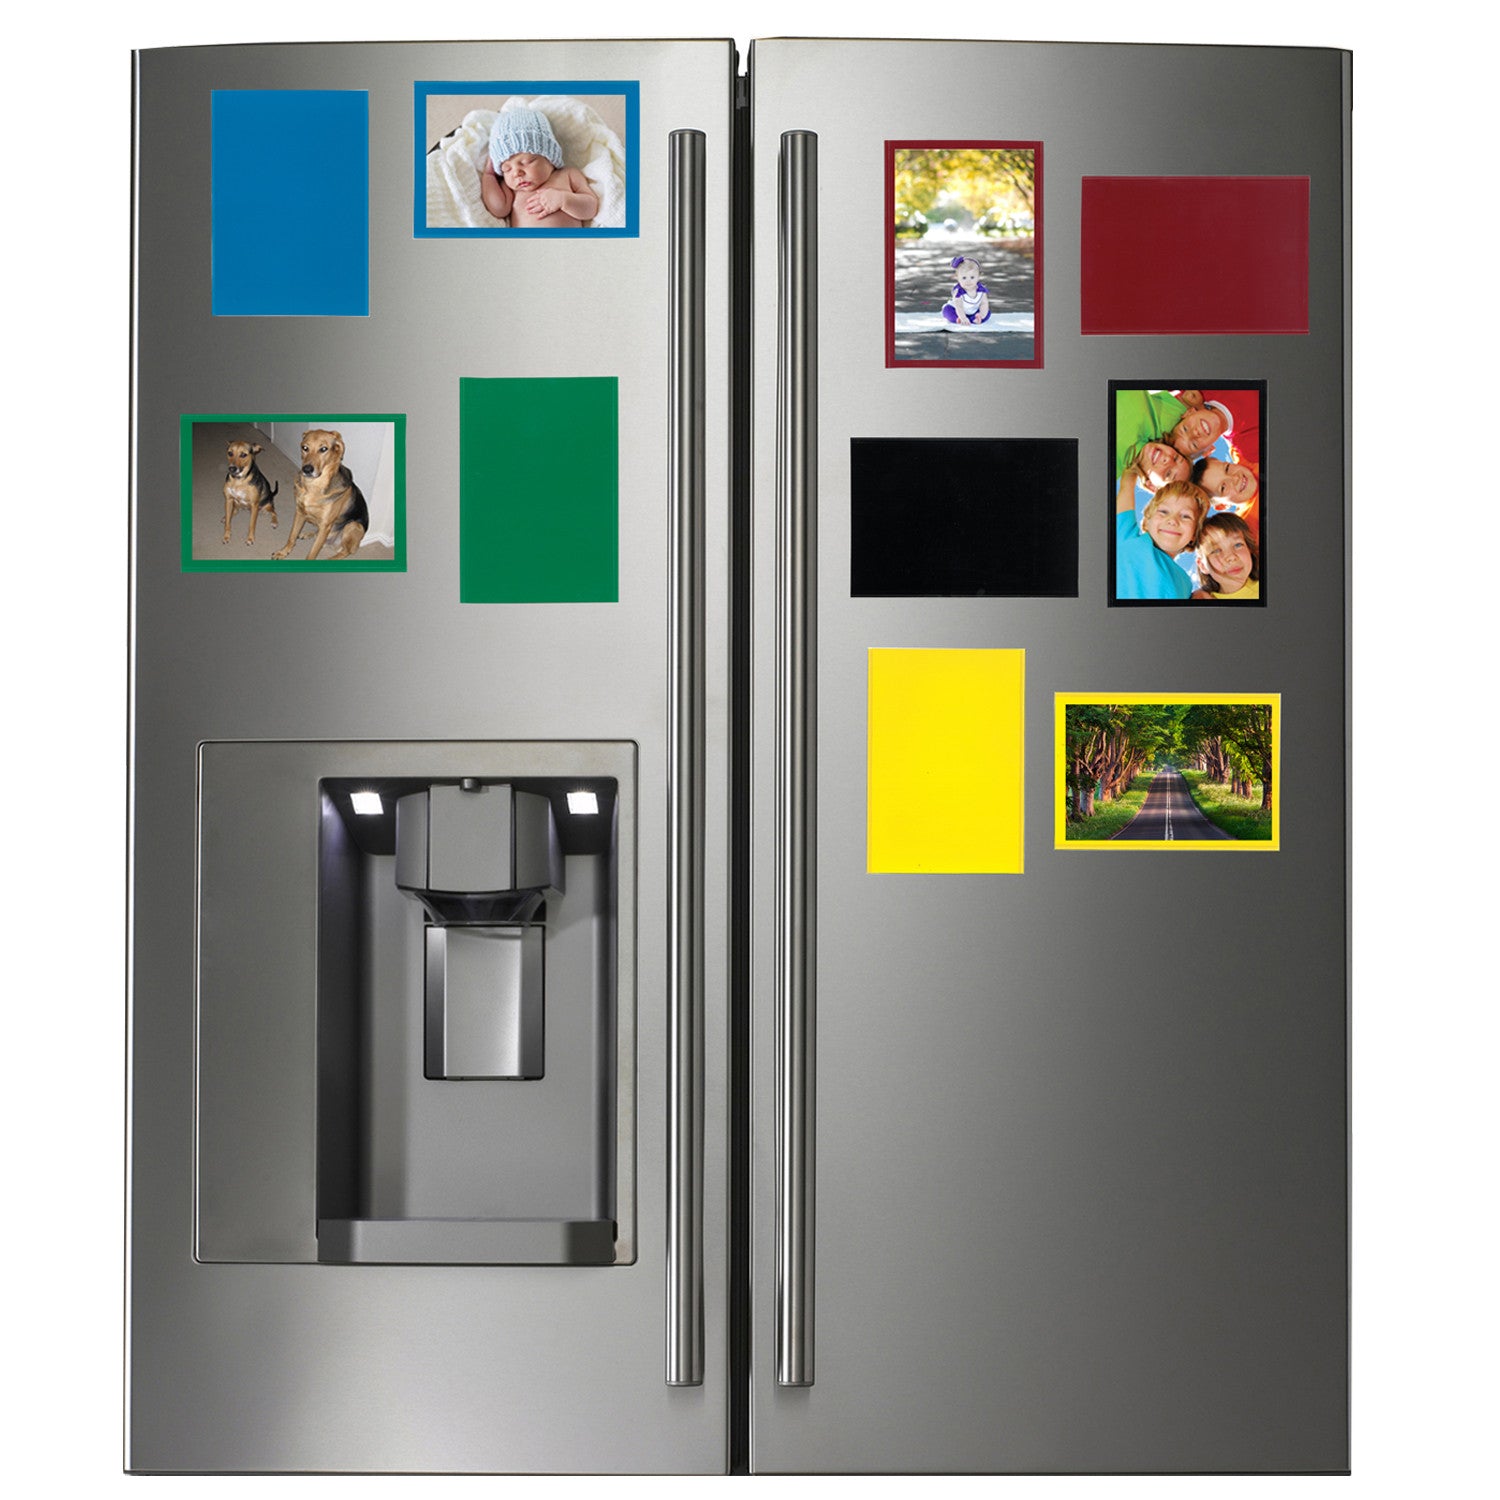 Hamesh Refrigerator Magnets 4x6